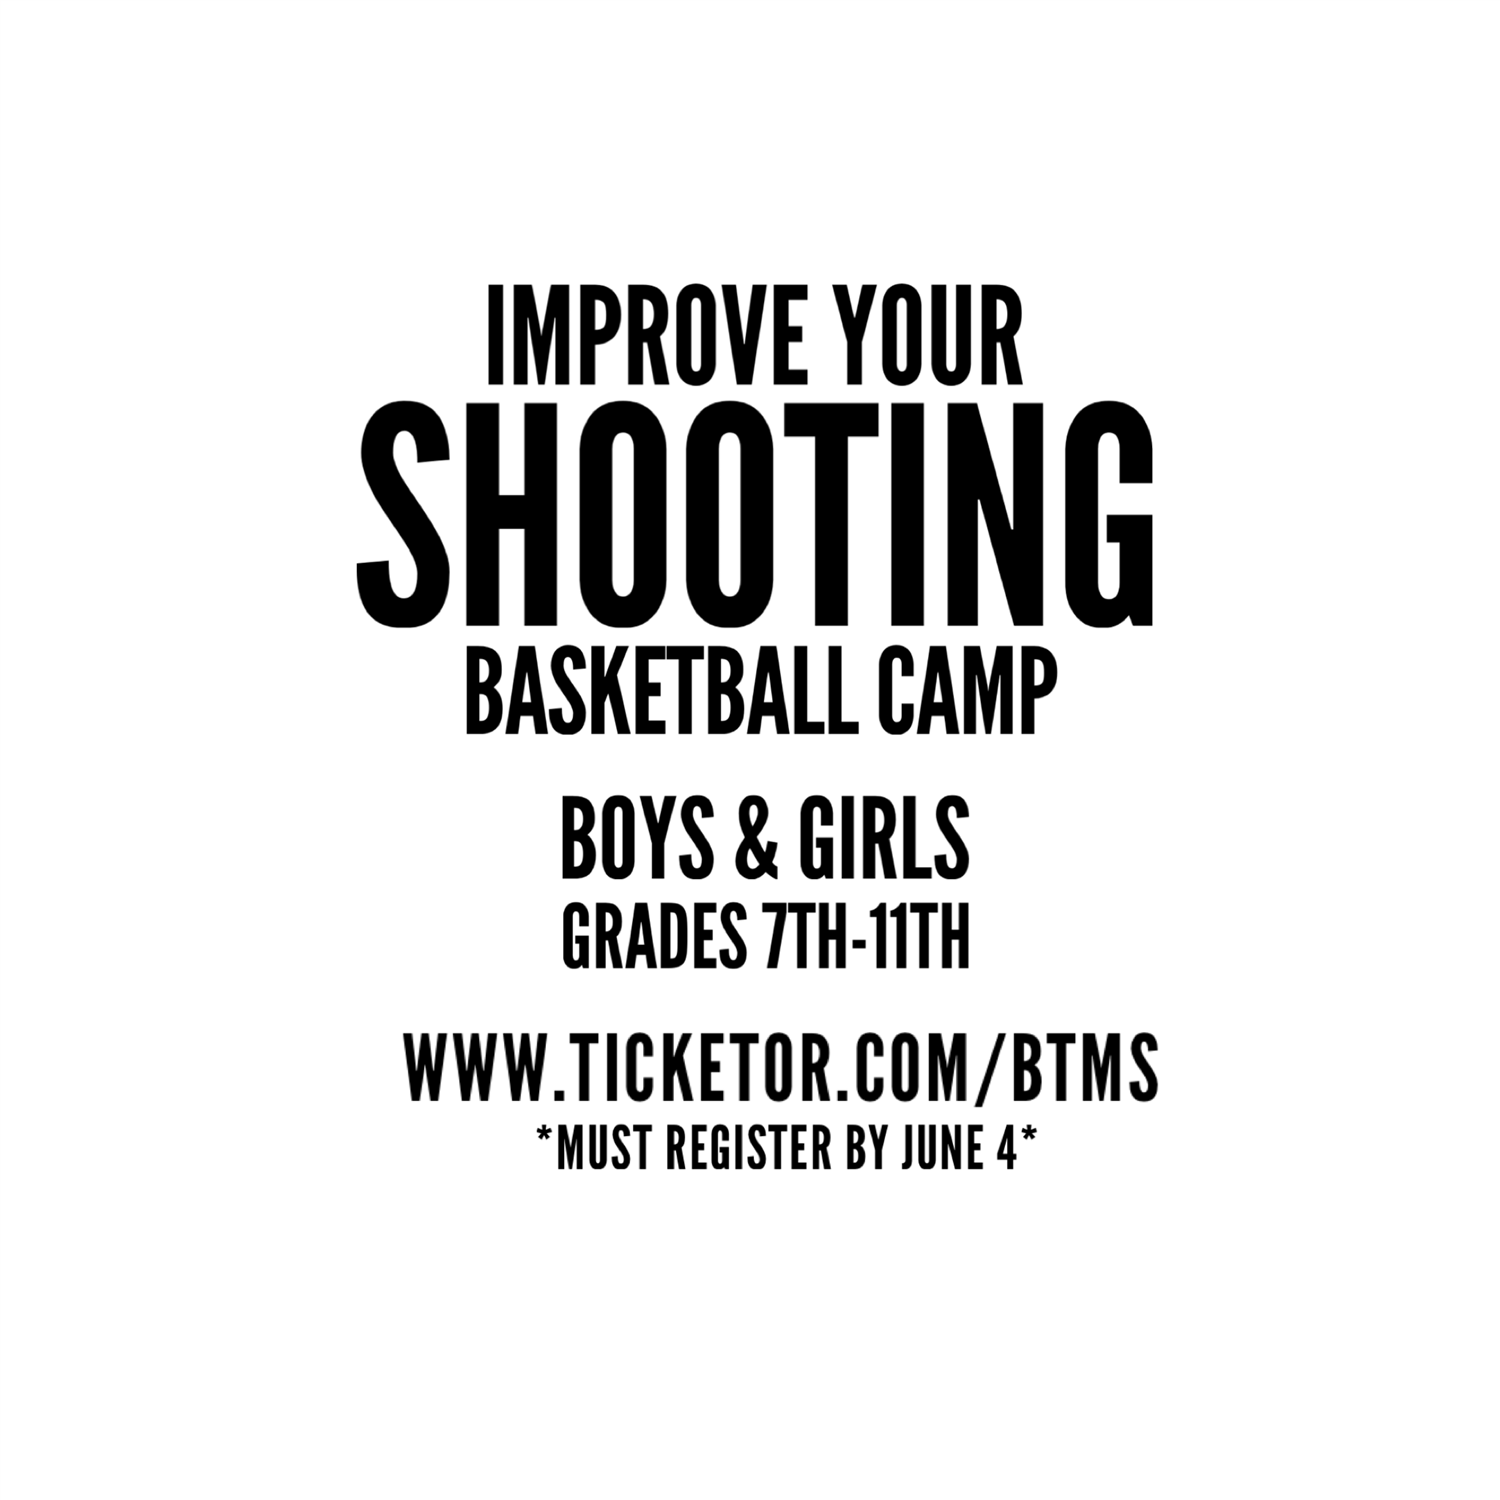 Improve Your Shooting Basketball Camp Boys & Girls Grades 7th-11th on jun. 05, 19:00@Moraine Valley - Compra entradas y obtén información enBTMS LLC 